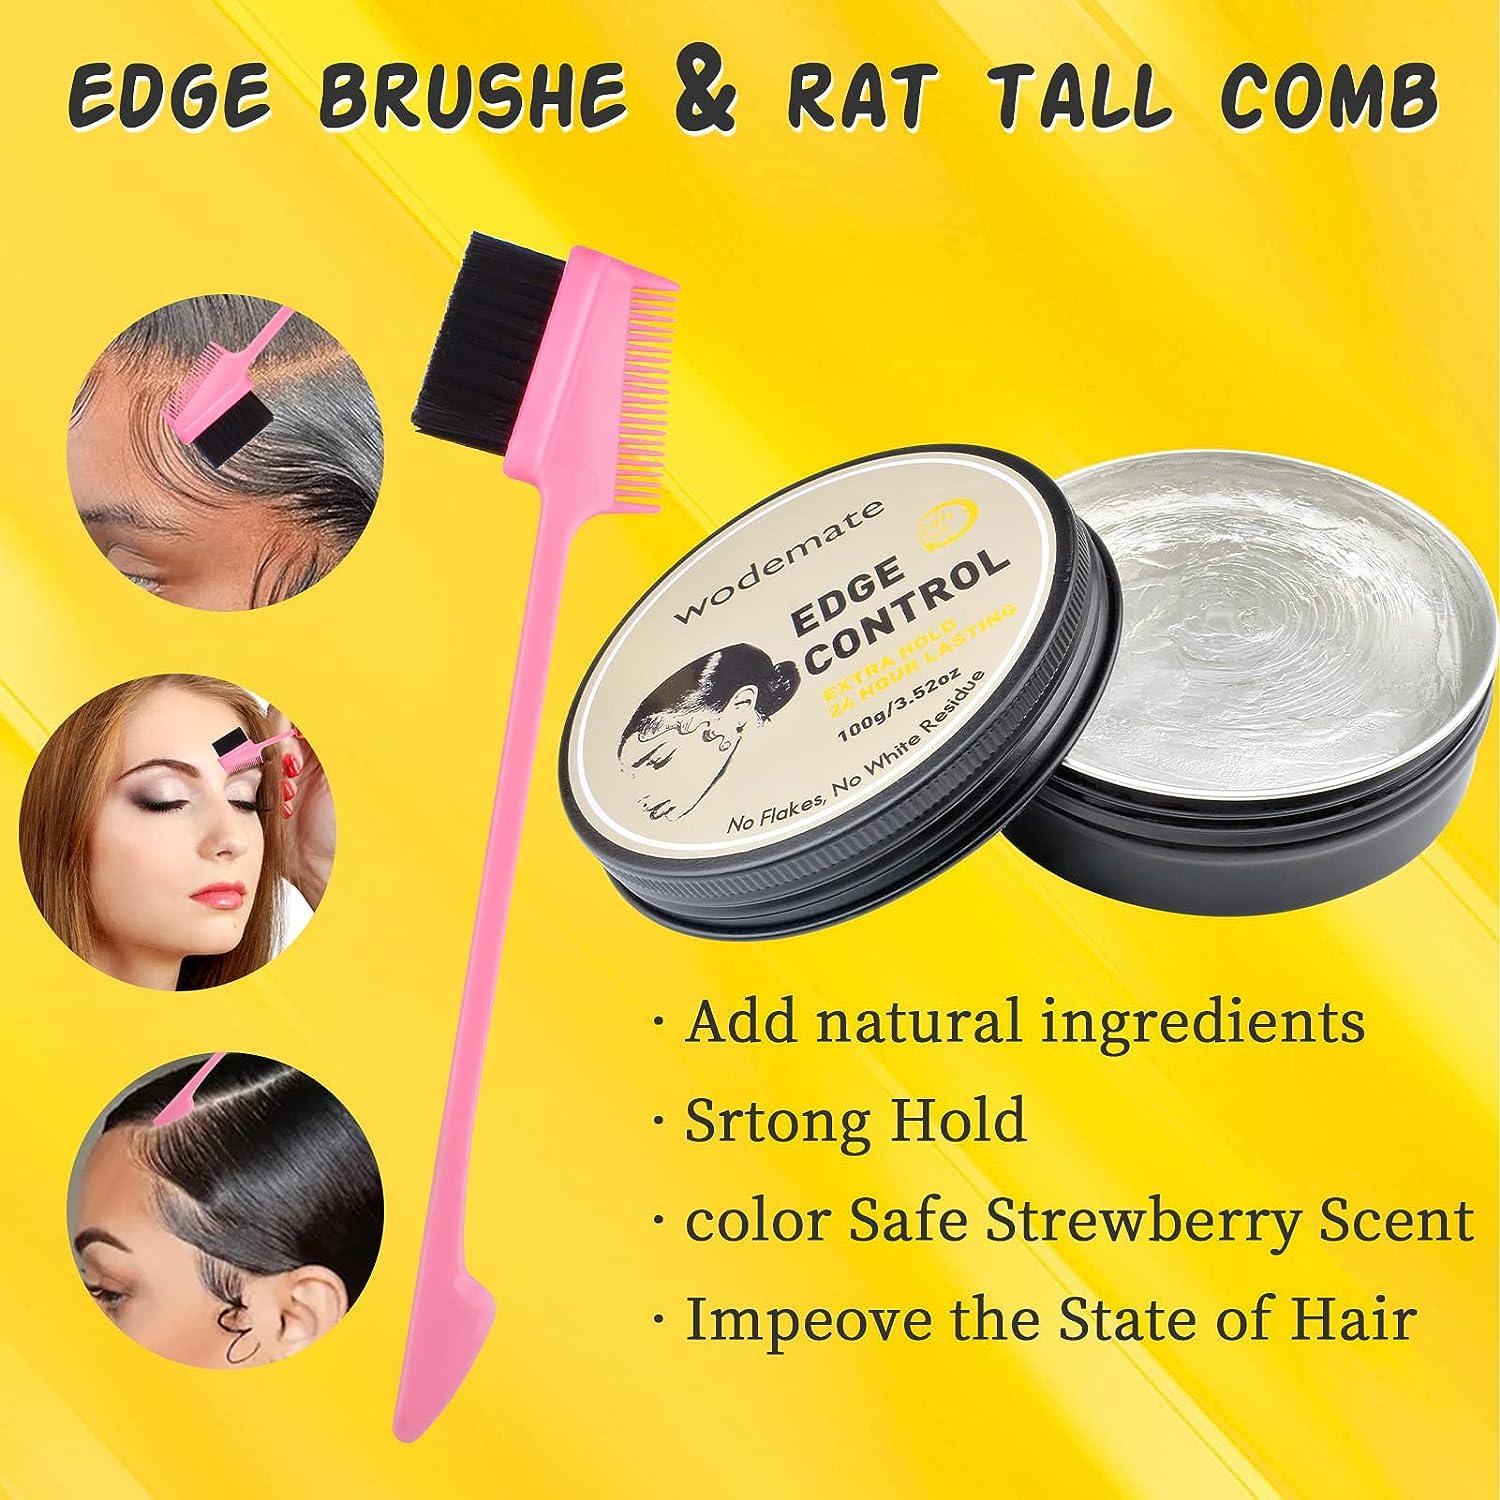 Edge Control Gel, Not Greasy Edge Gel Long Lasting Natural Hair